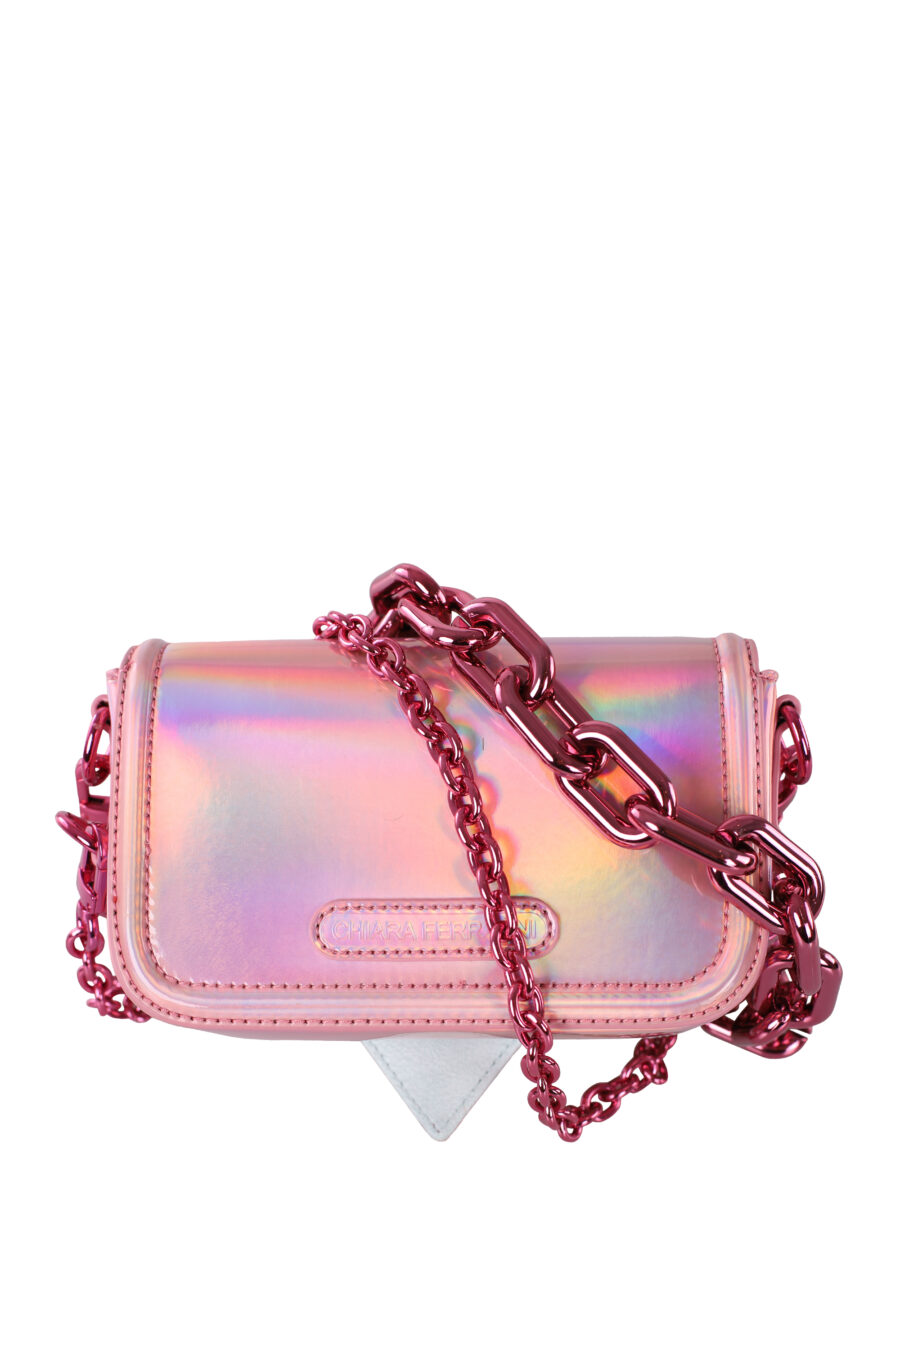 Pink shoulder bag with monochrome eye logo - IMG 5962